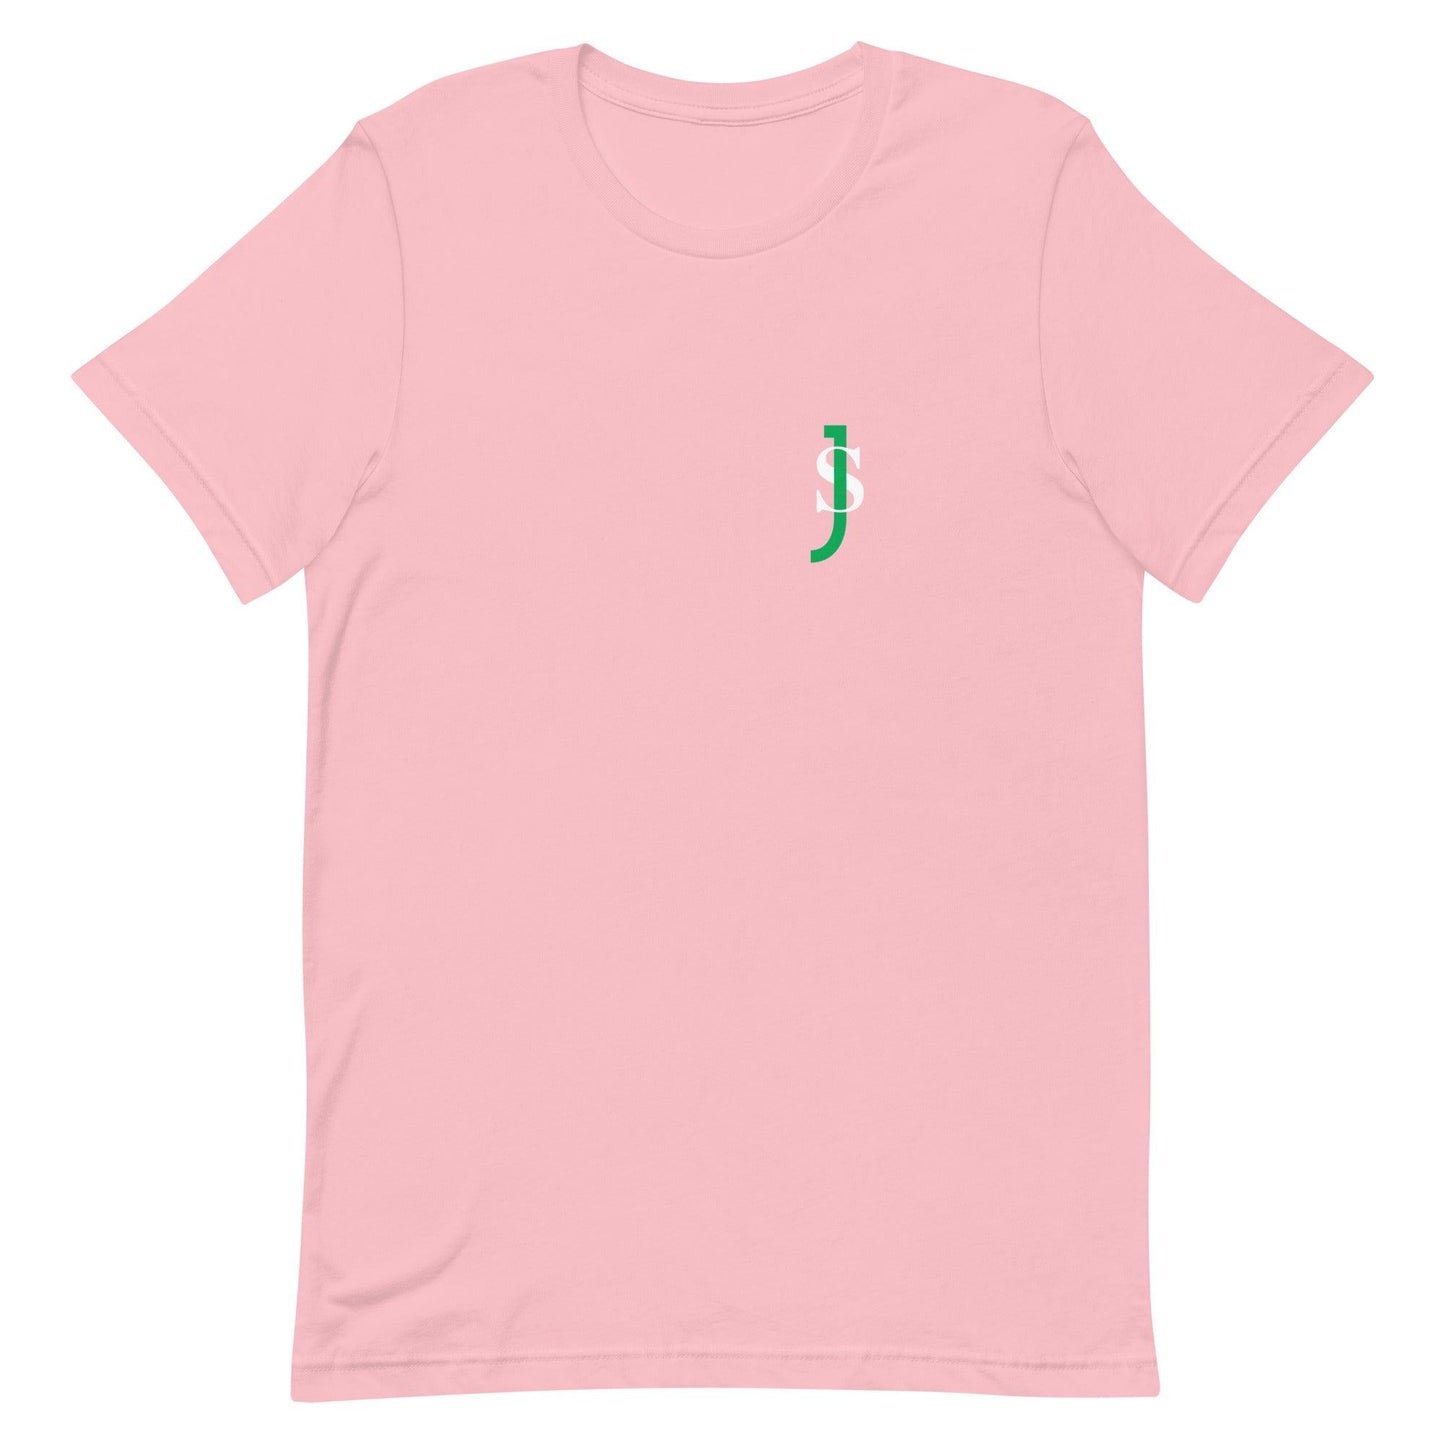 Jyaire Shorter "Signature" t-shirt - Fan Arch